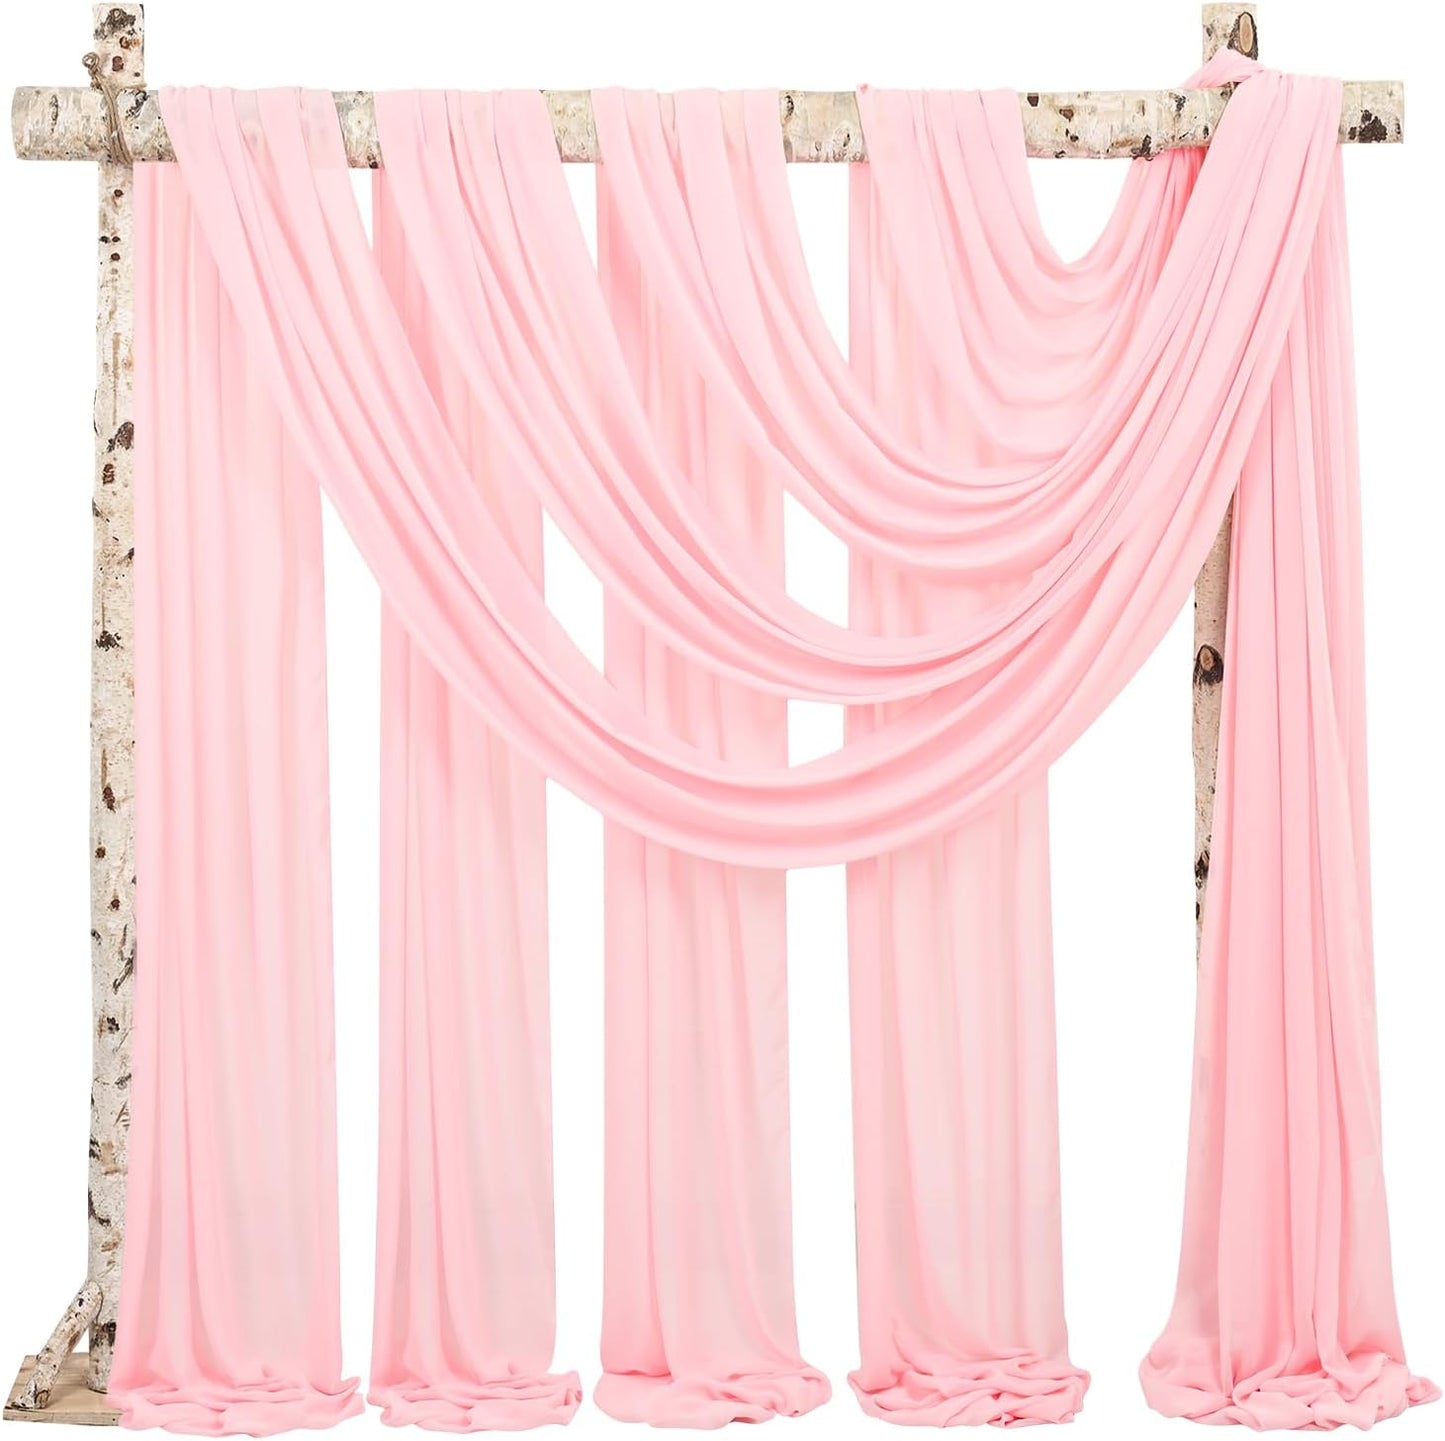 28"x20ft Wedding Arch Drapes for Ceremony Chiffon Fabric